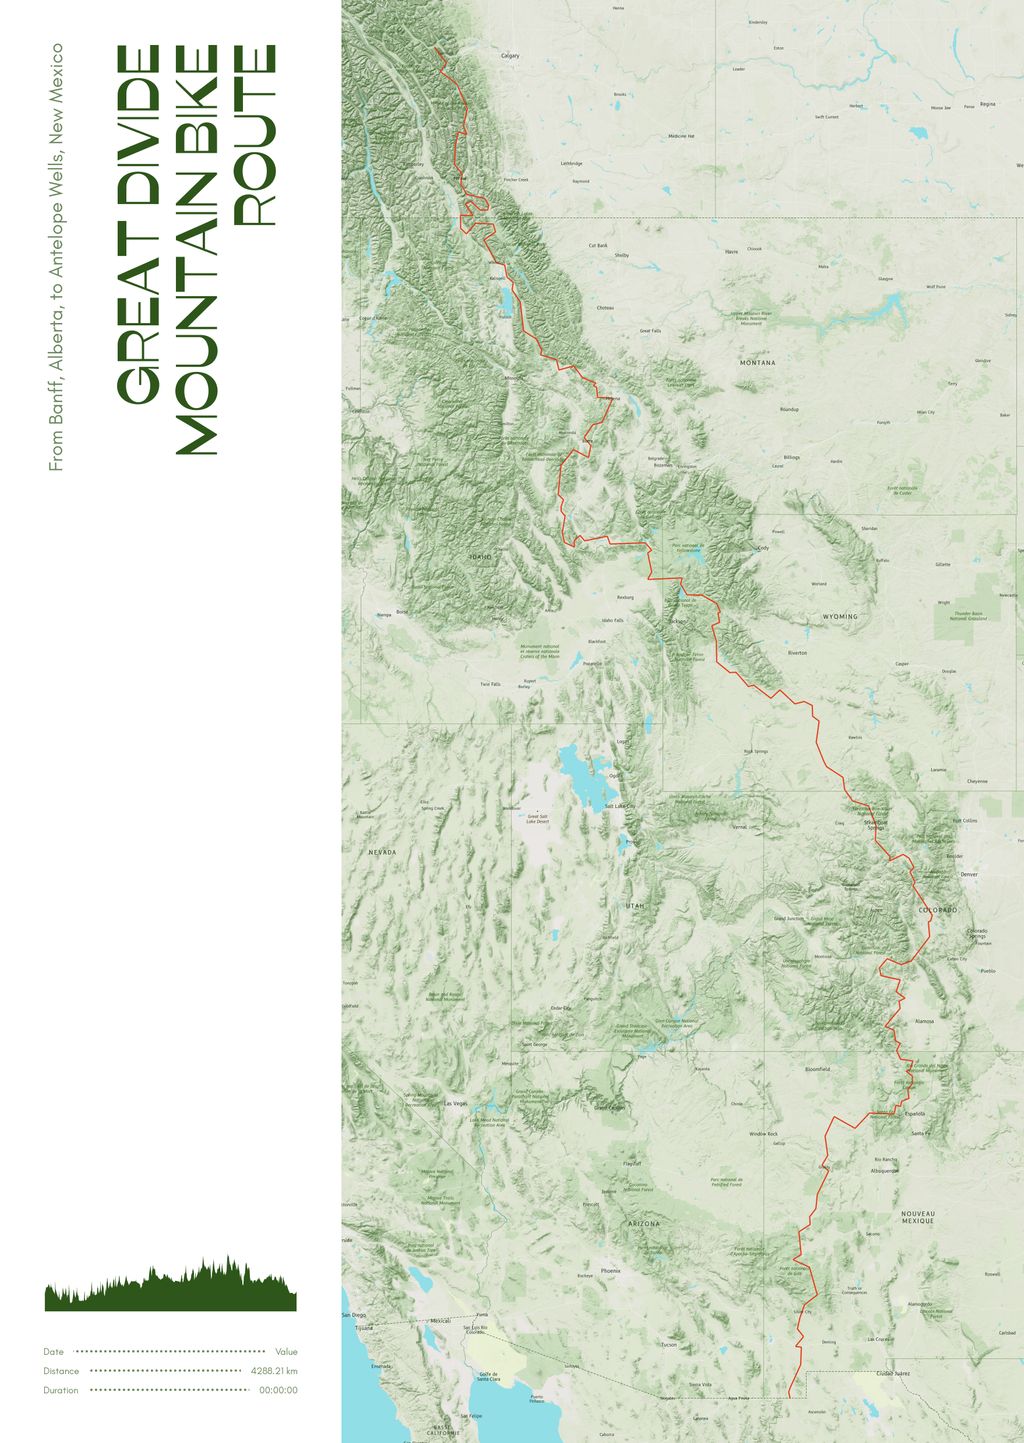 Póster con un mapa de Great Divide
Mountain Bike 
Route